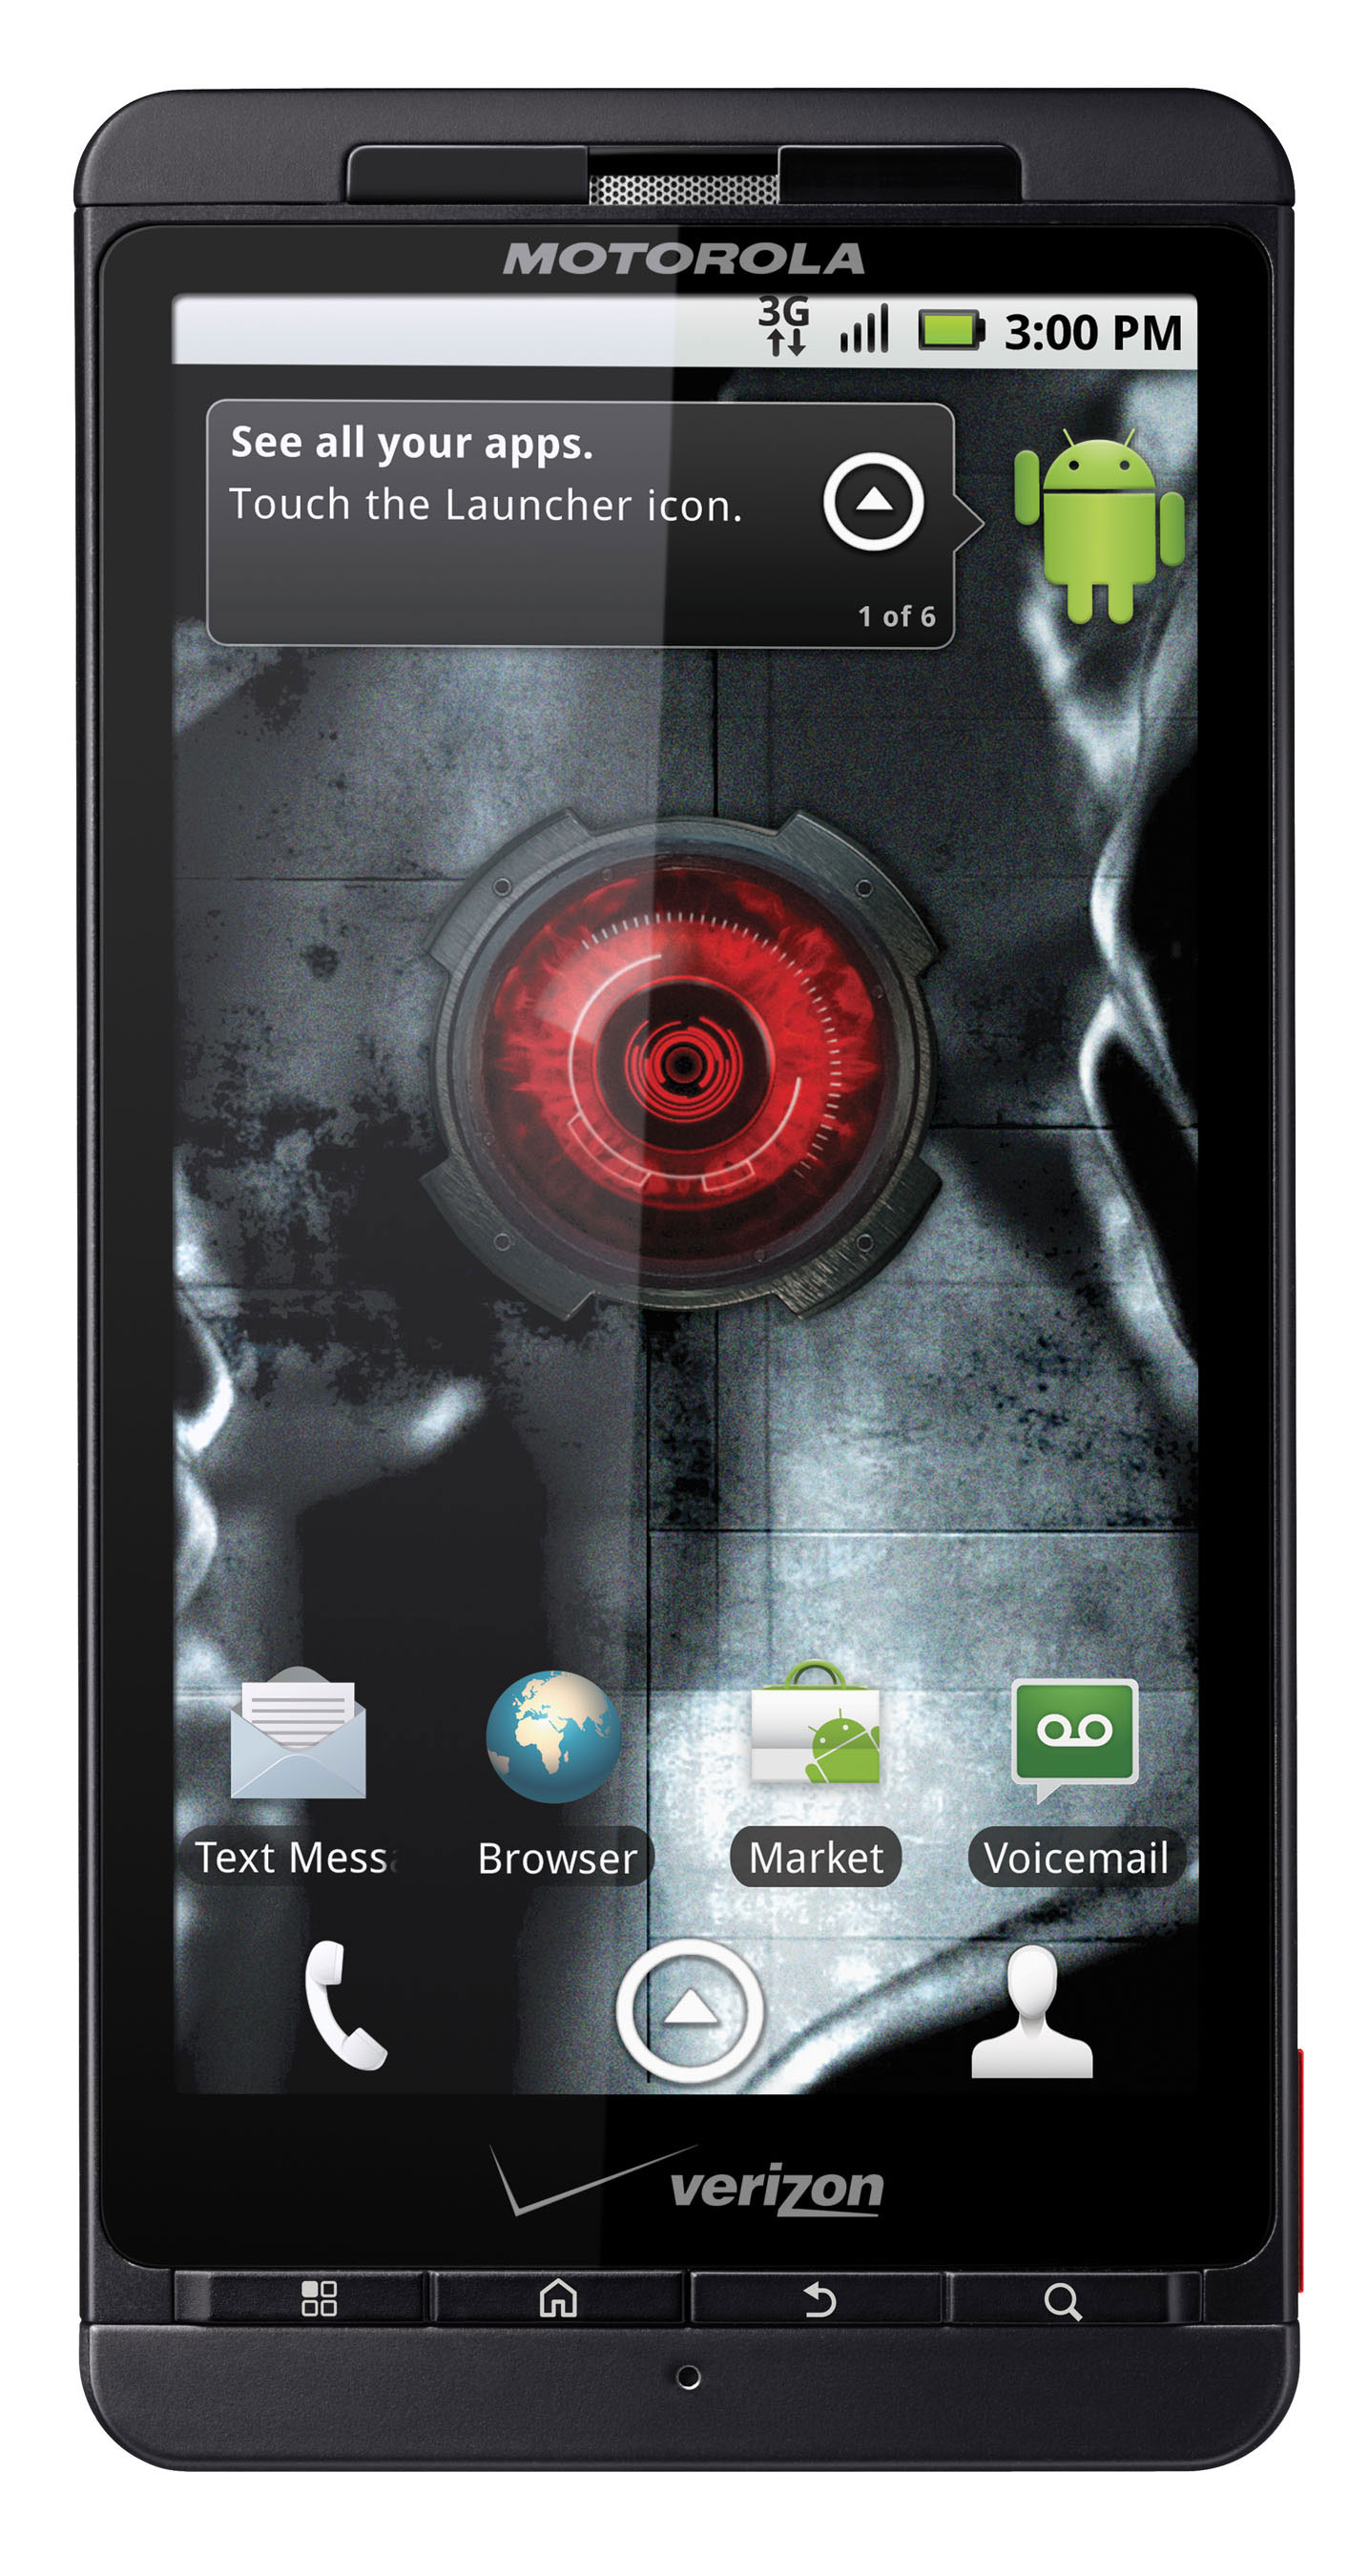 Evo Android Phone